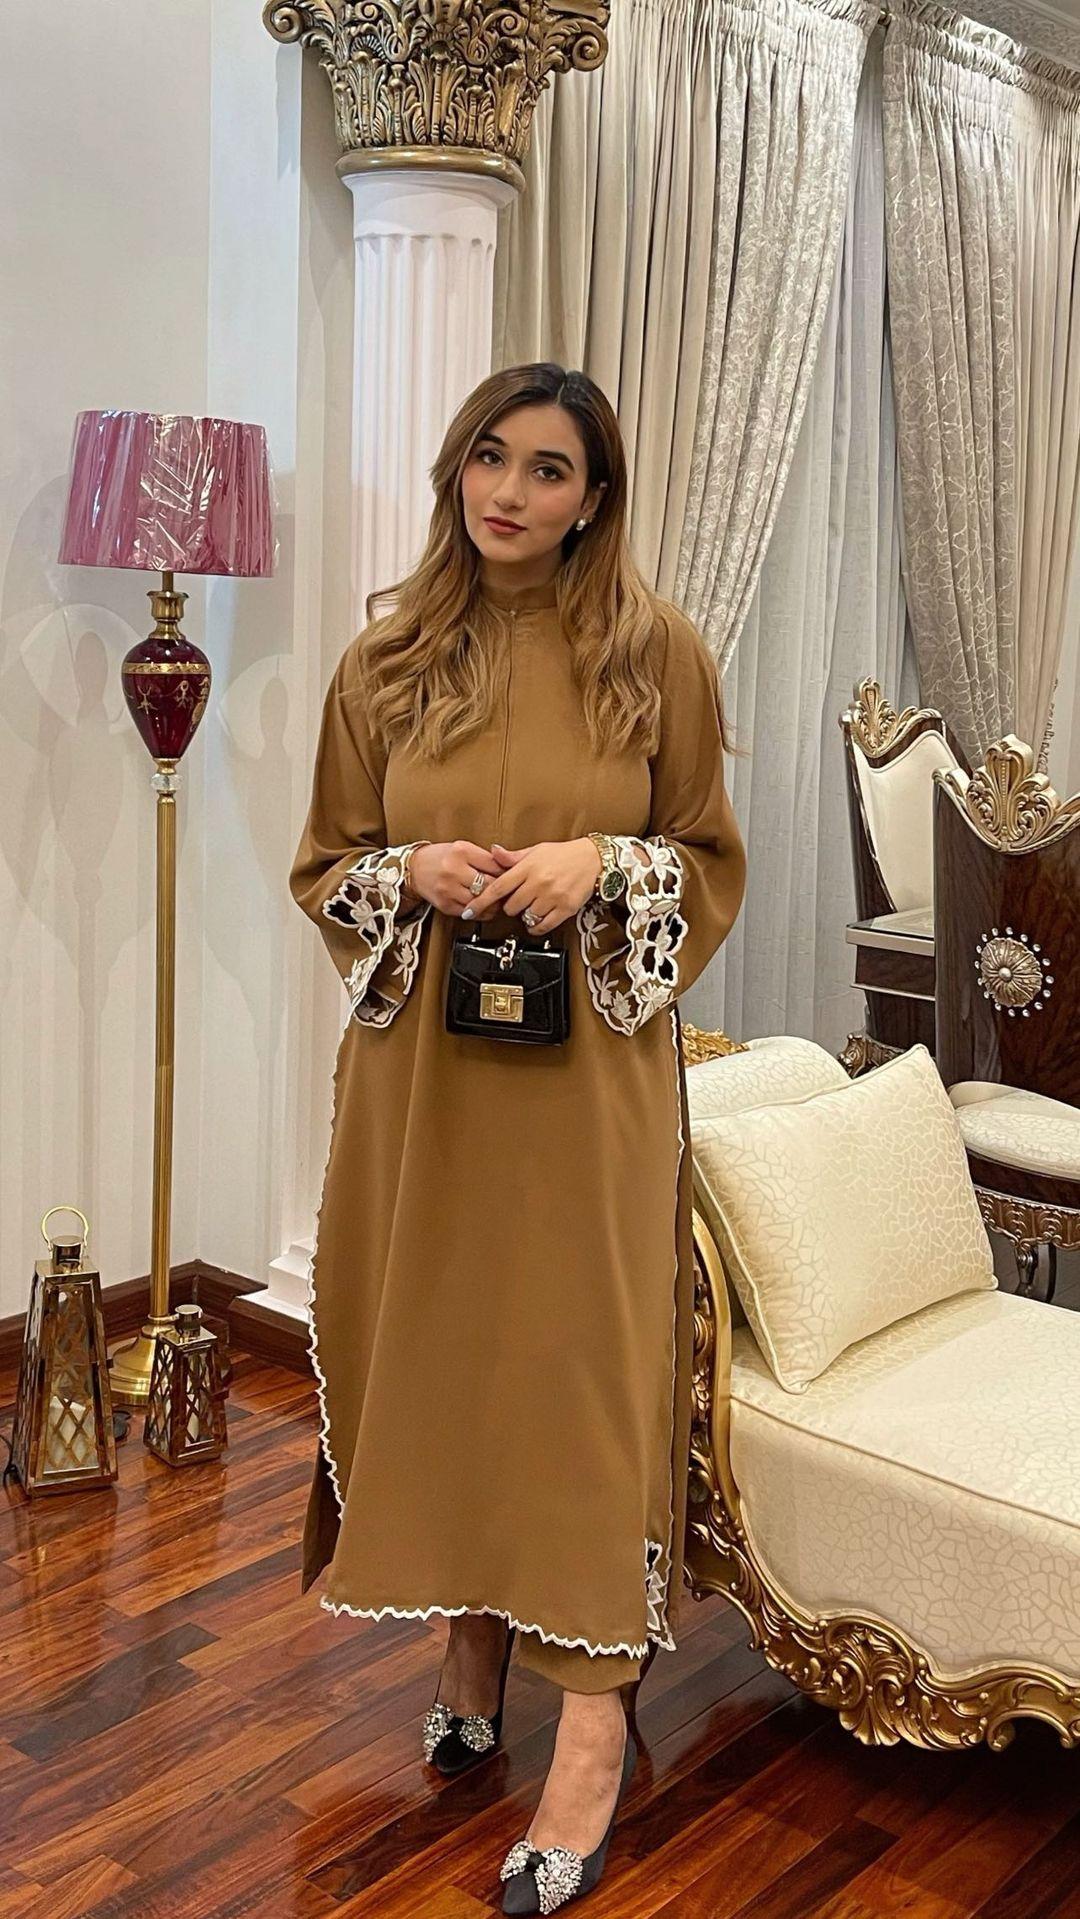 Shop Quality Ladies Tops in Pakistan Online